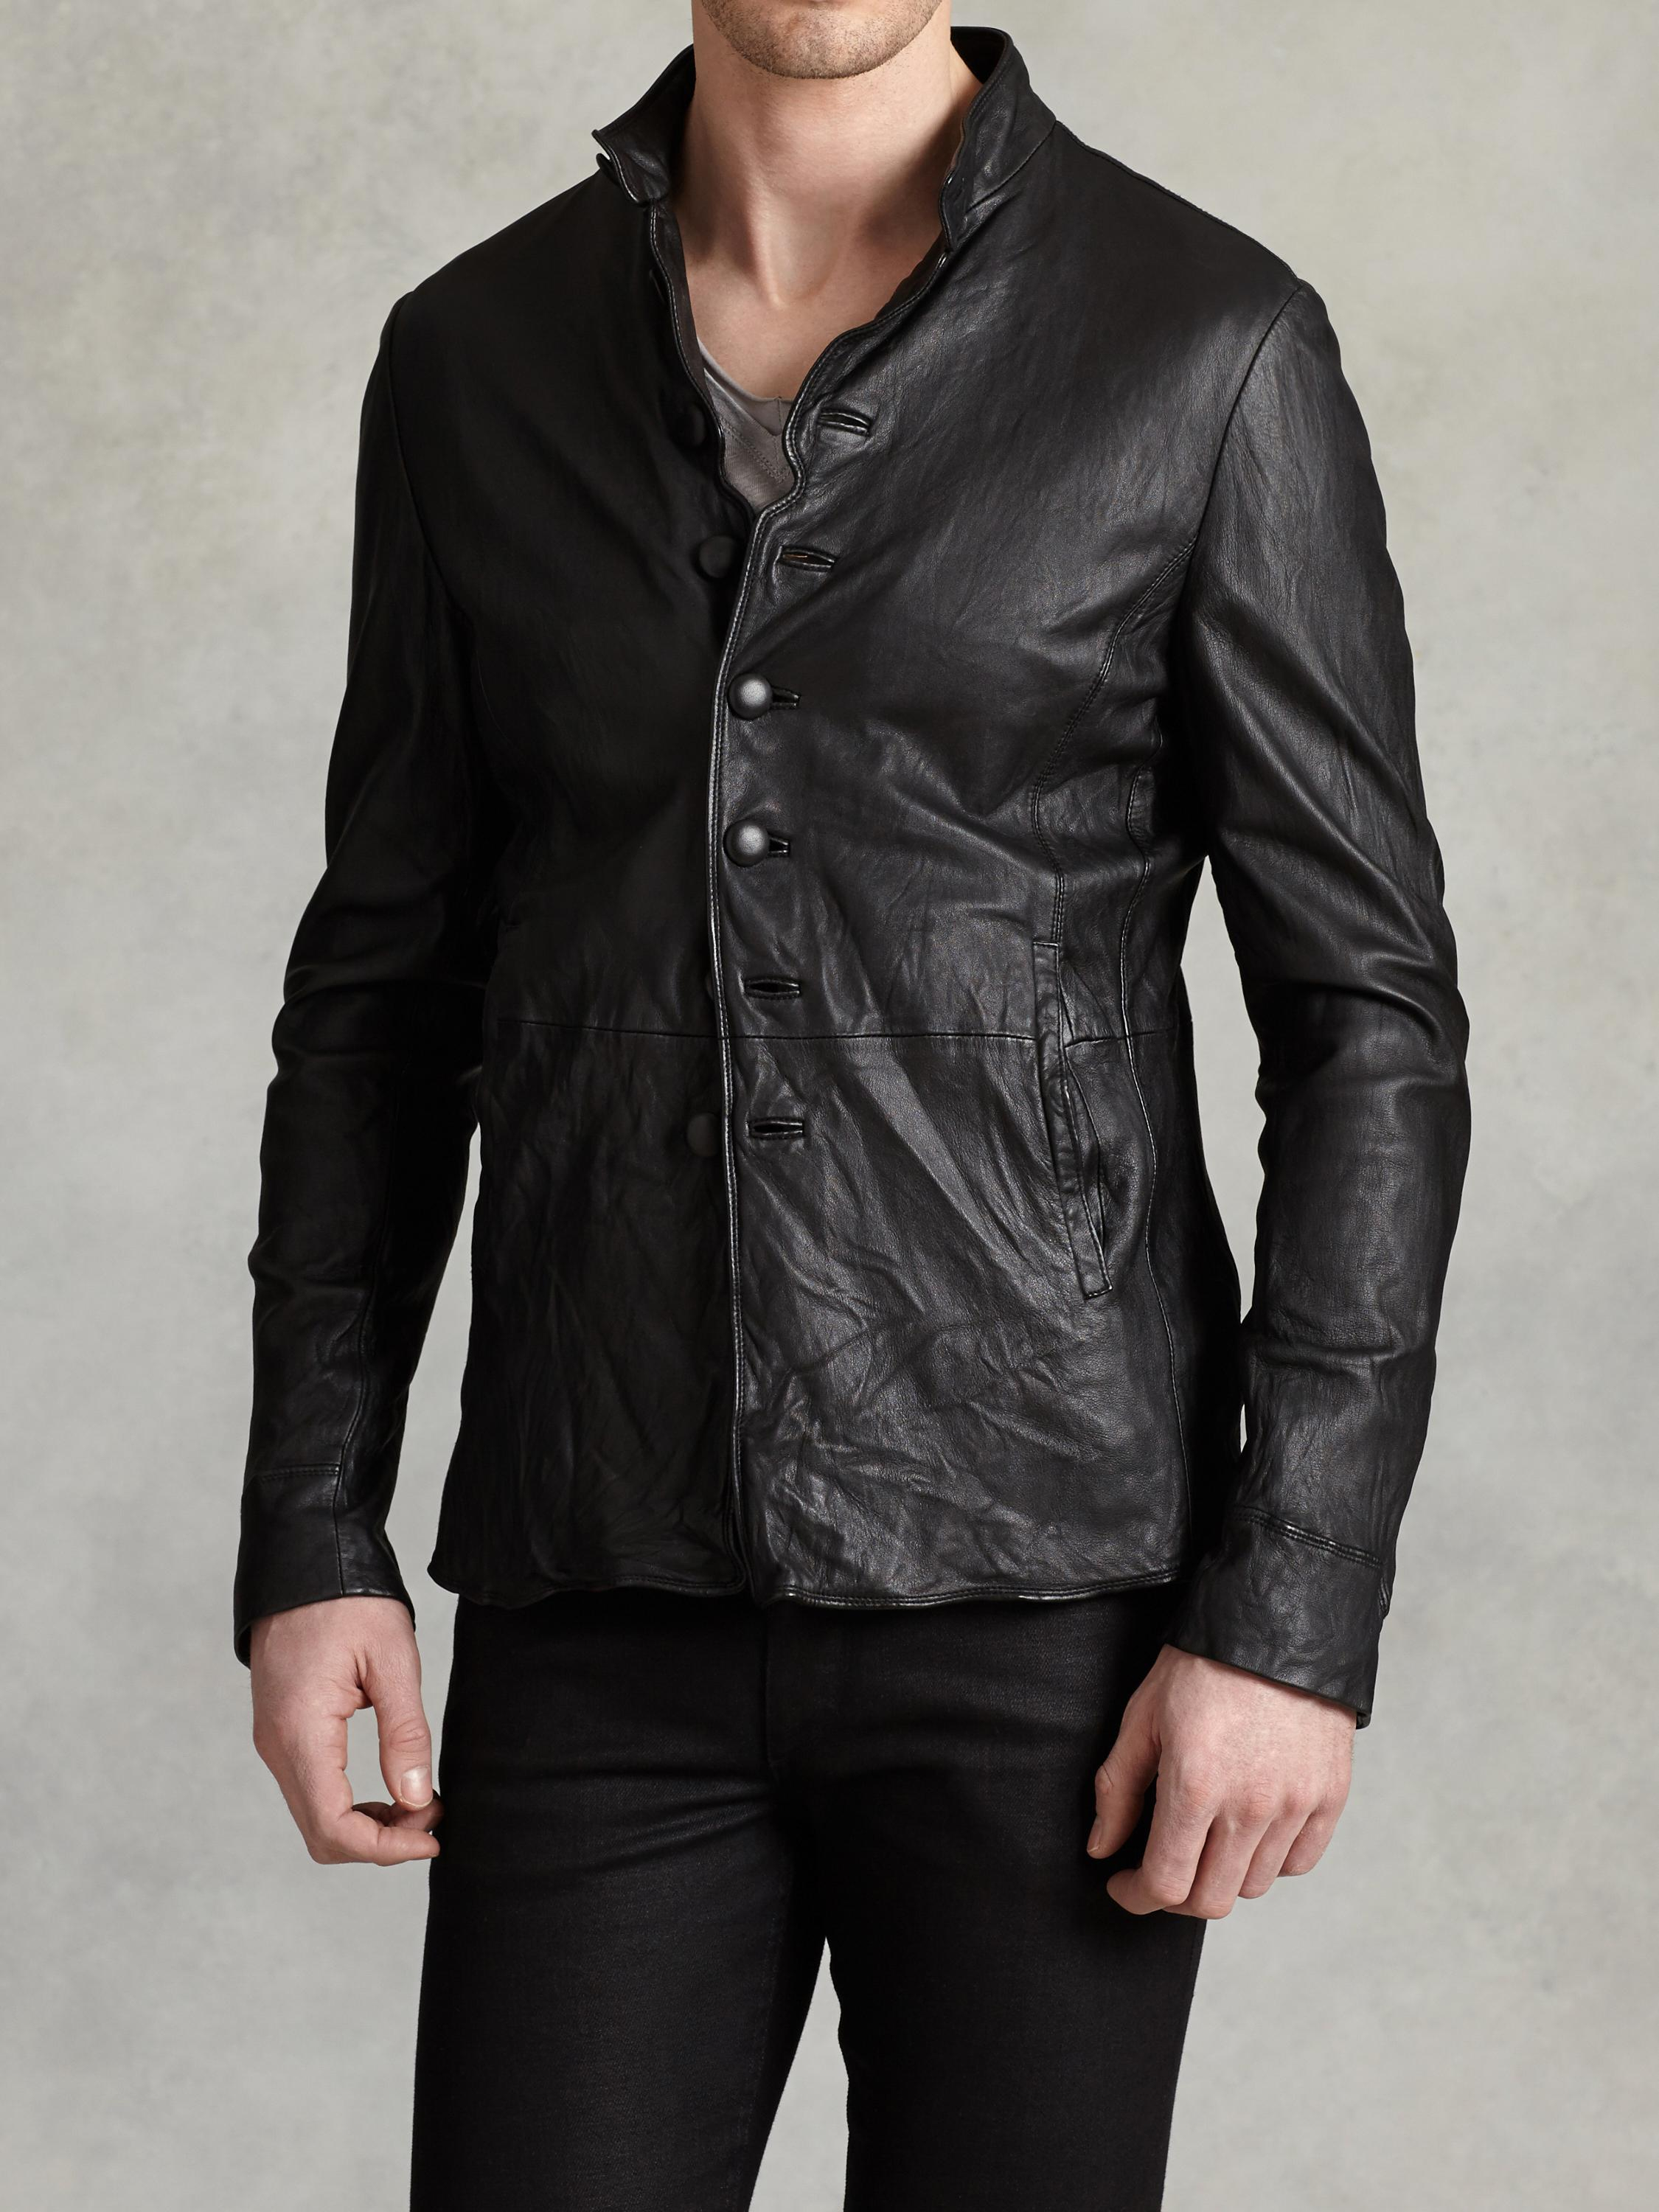 Lyst - John Varvatos Lambskin Leather Jacket in Black for Men